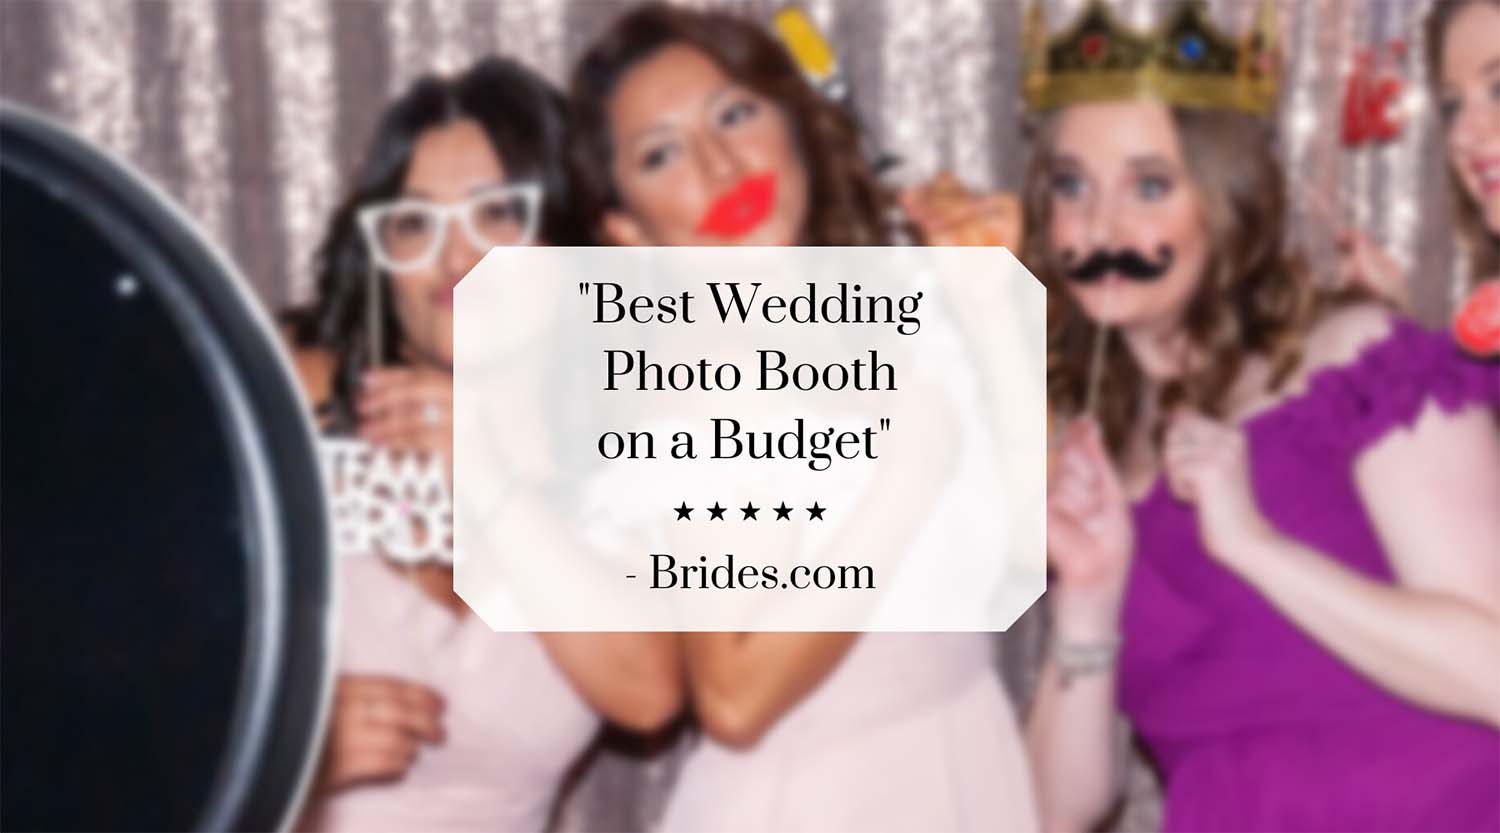 Best photo booth on a budget via brides.com